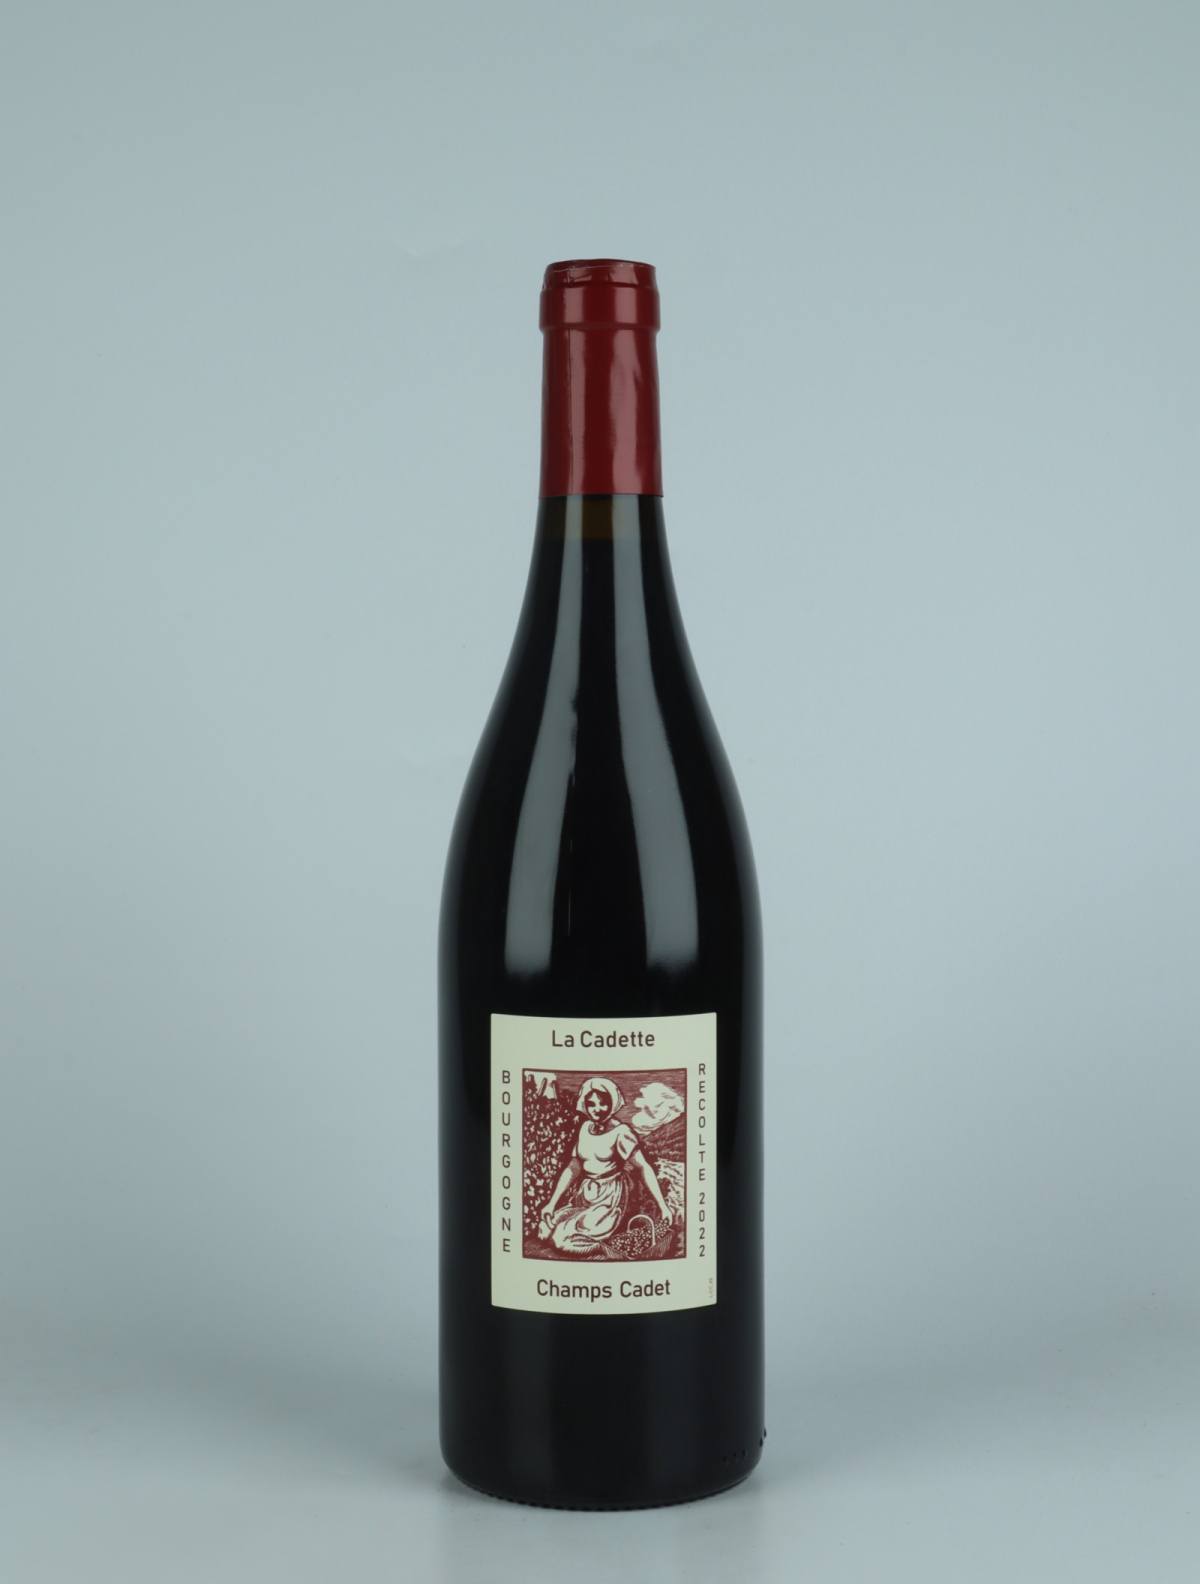 A bottle 2022 Bourgogne Rouge - Champs Cadet Red wine from Domaine de la Cadette, Burgundy in France